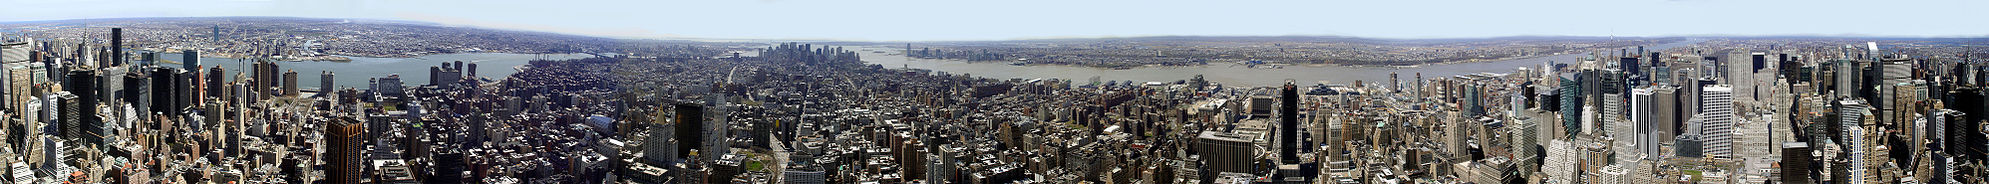 Панорамный снимок 360° Нью-Йорка со здания Эмпайр-Стейт-Билдинг весной 2005 года.